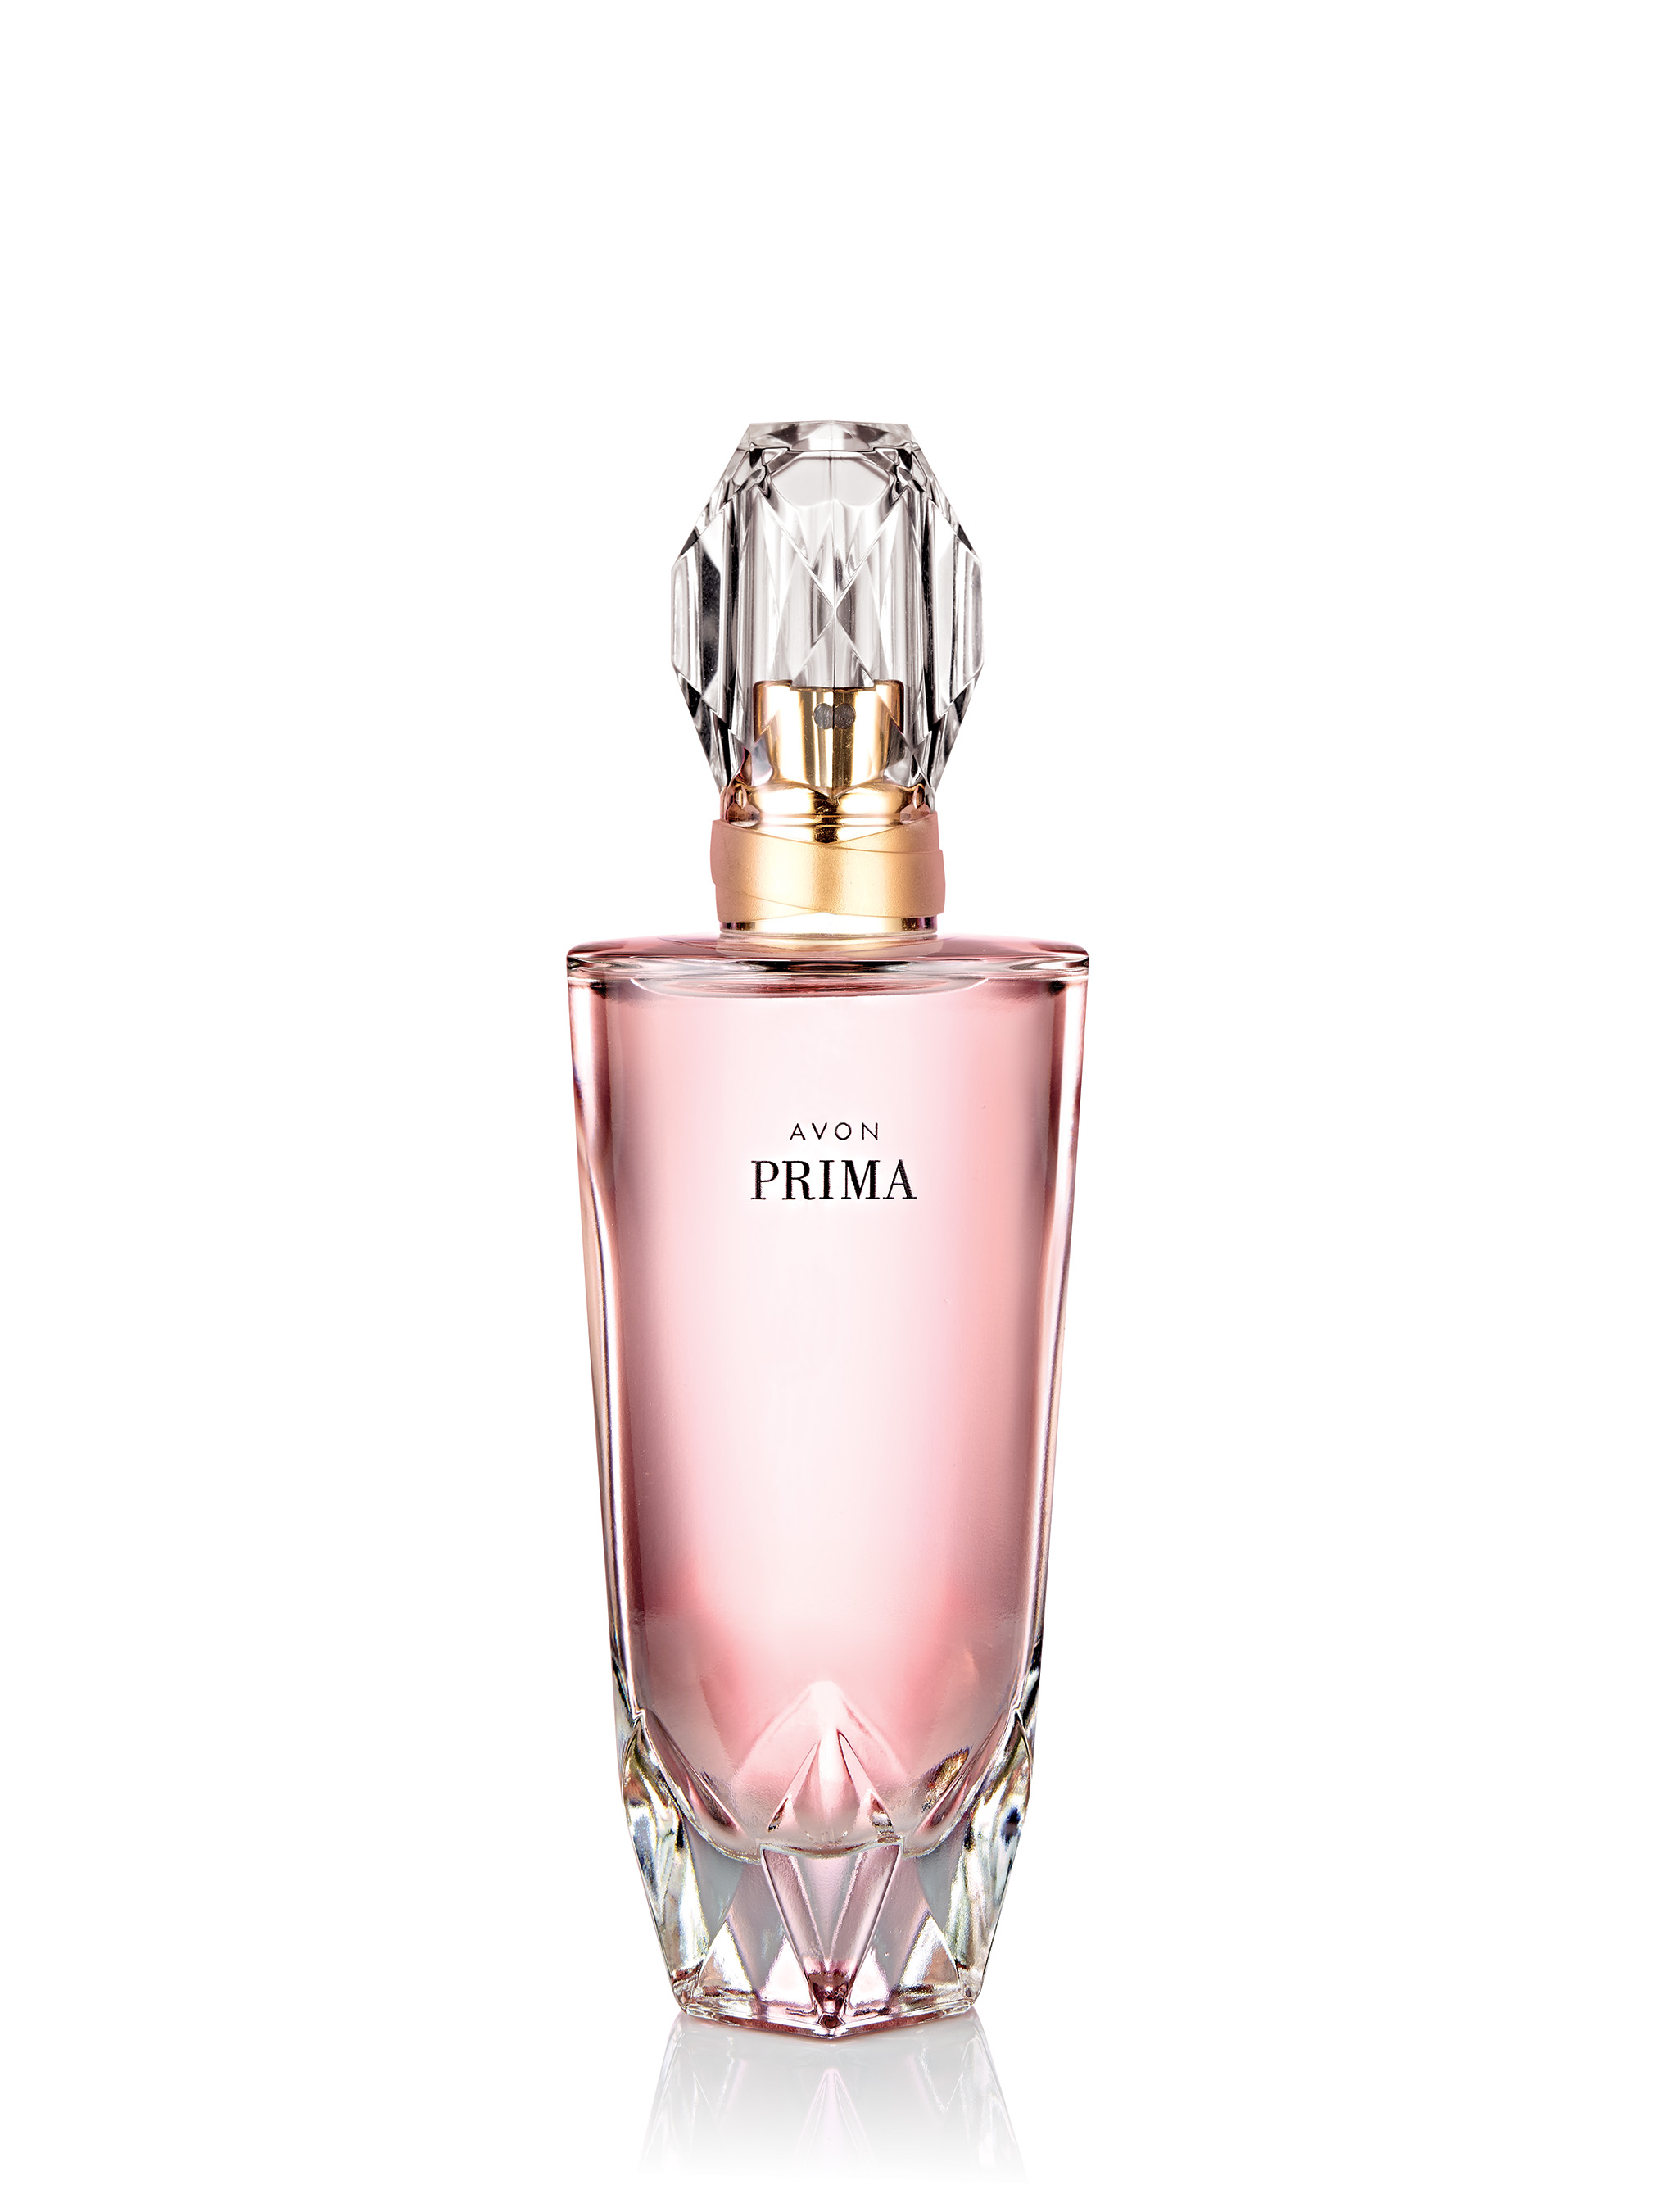 Avon To Release 'Prima' Ballerina Inspired Fragrance This Fall | LATF USA2023 x 2700